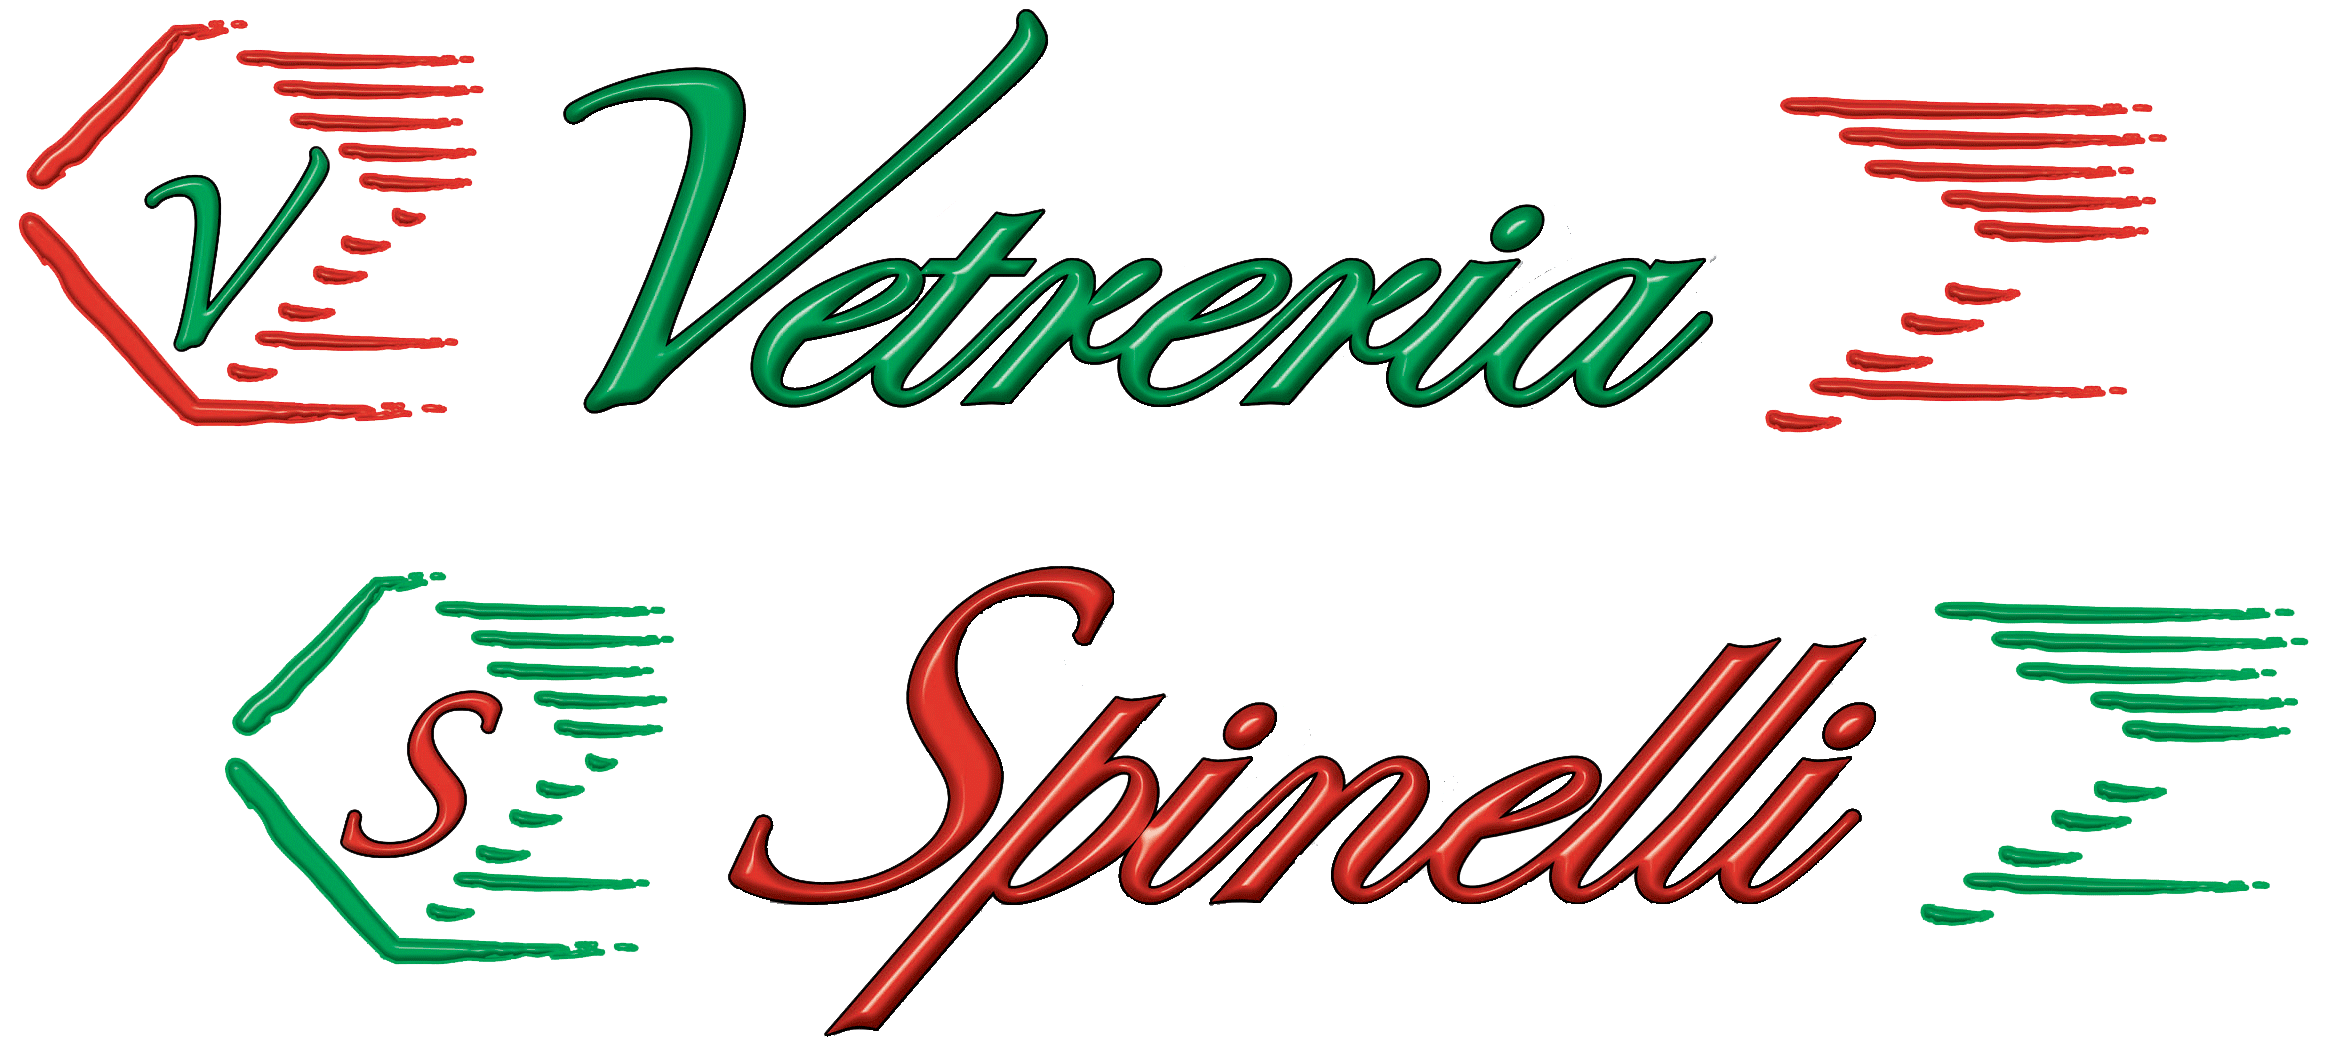 Vetreria Spinelli